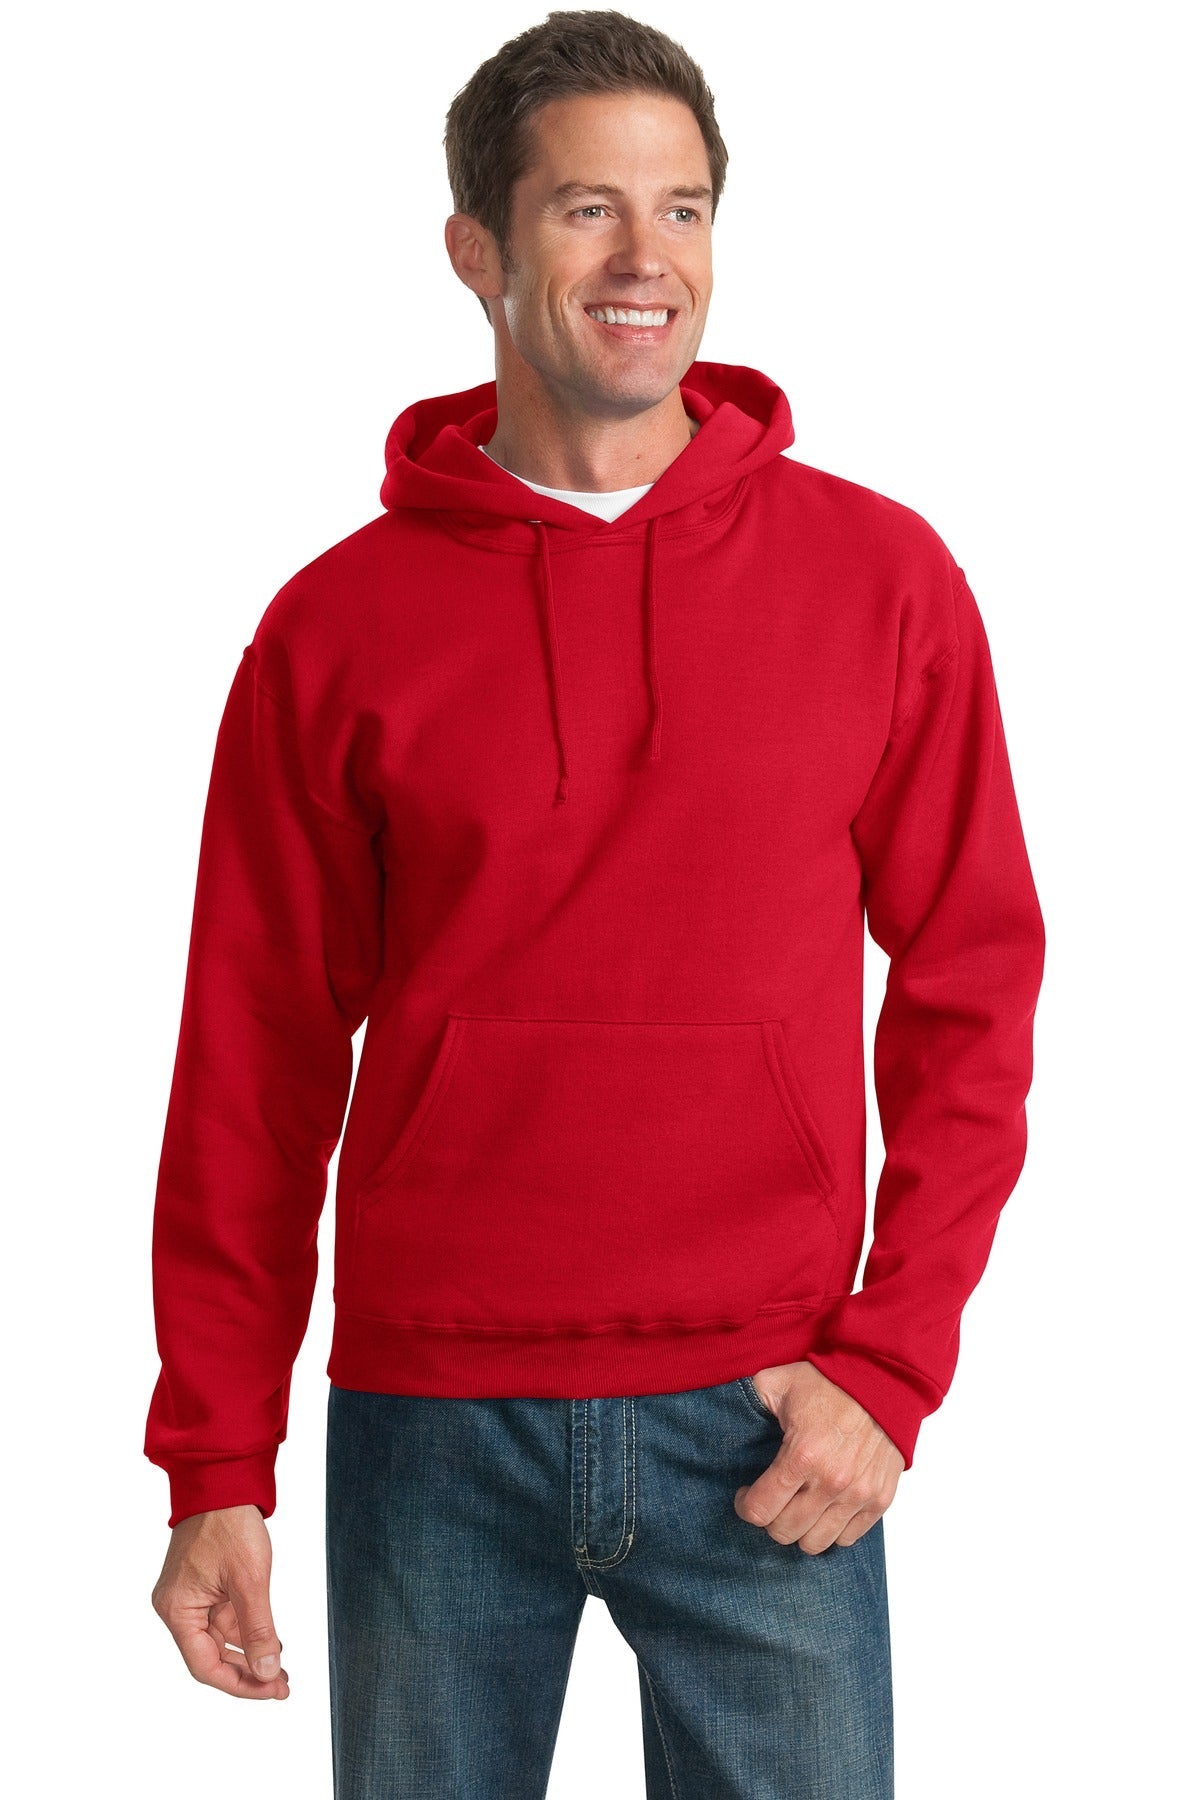 JERZEES® - NuBlend® Pullover Hooded Sweatshirt. 996M [True Red] - DFW Impression